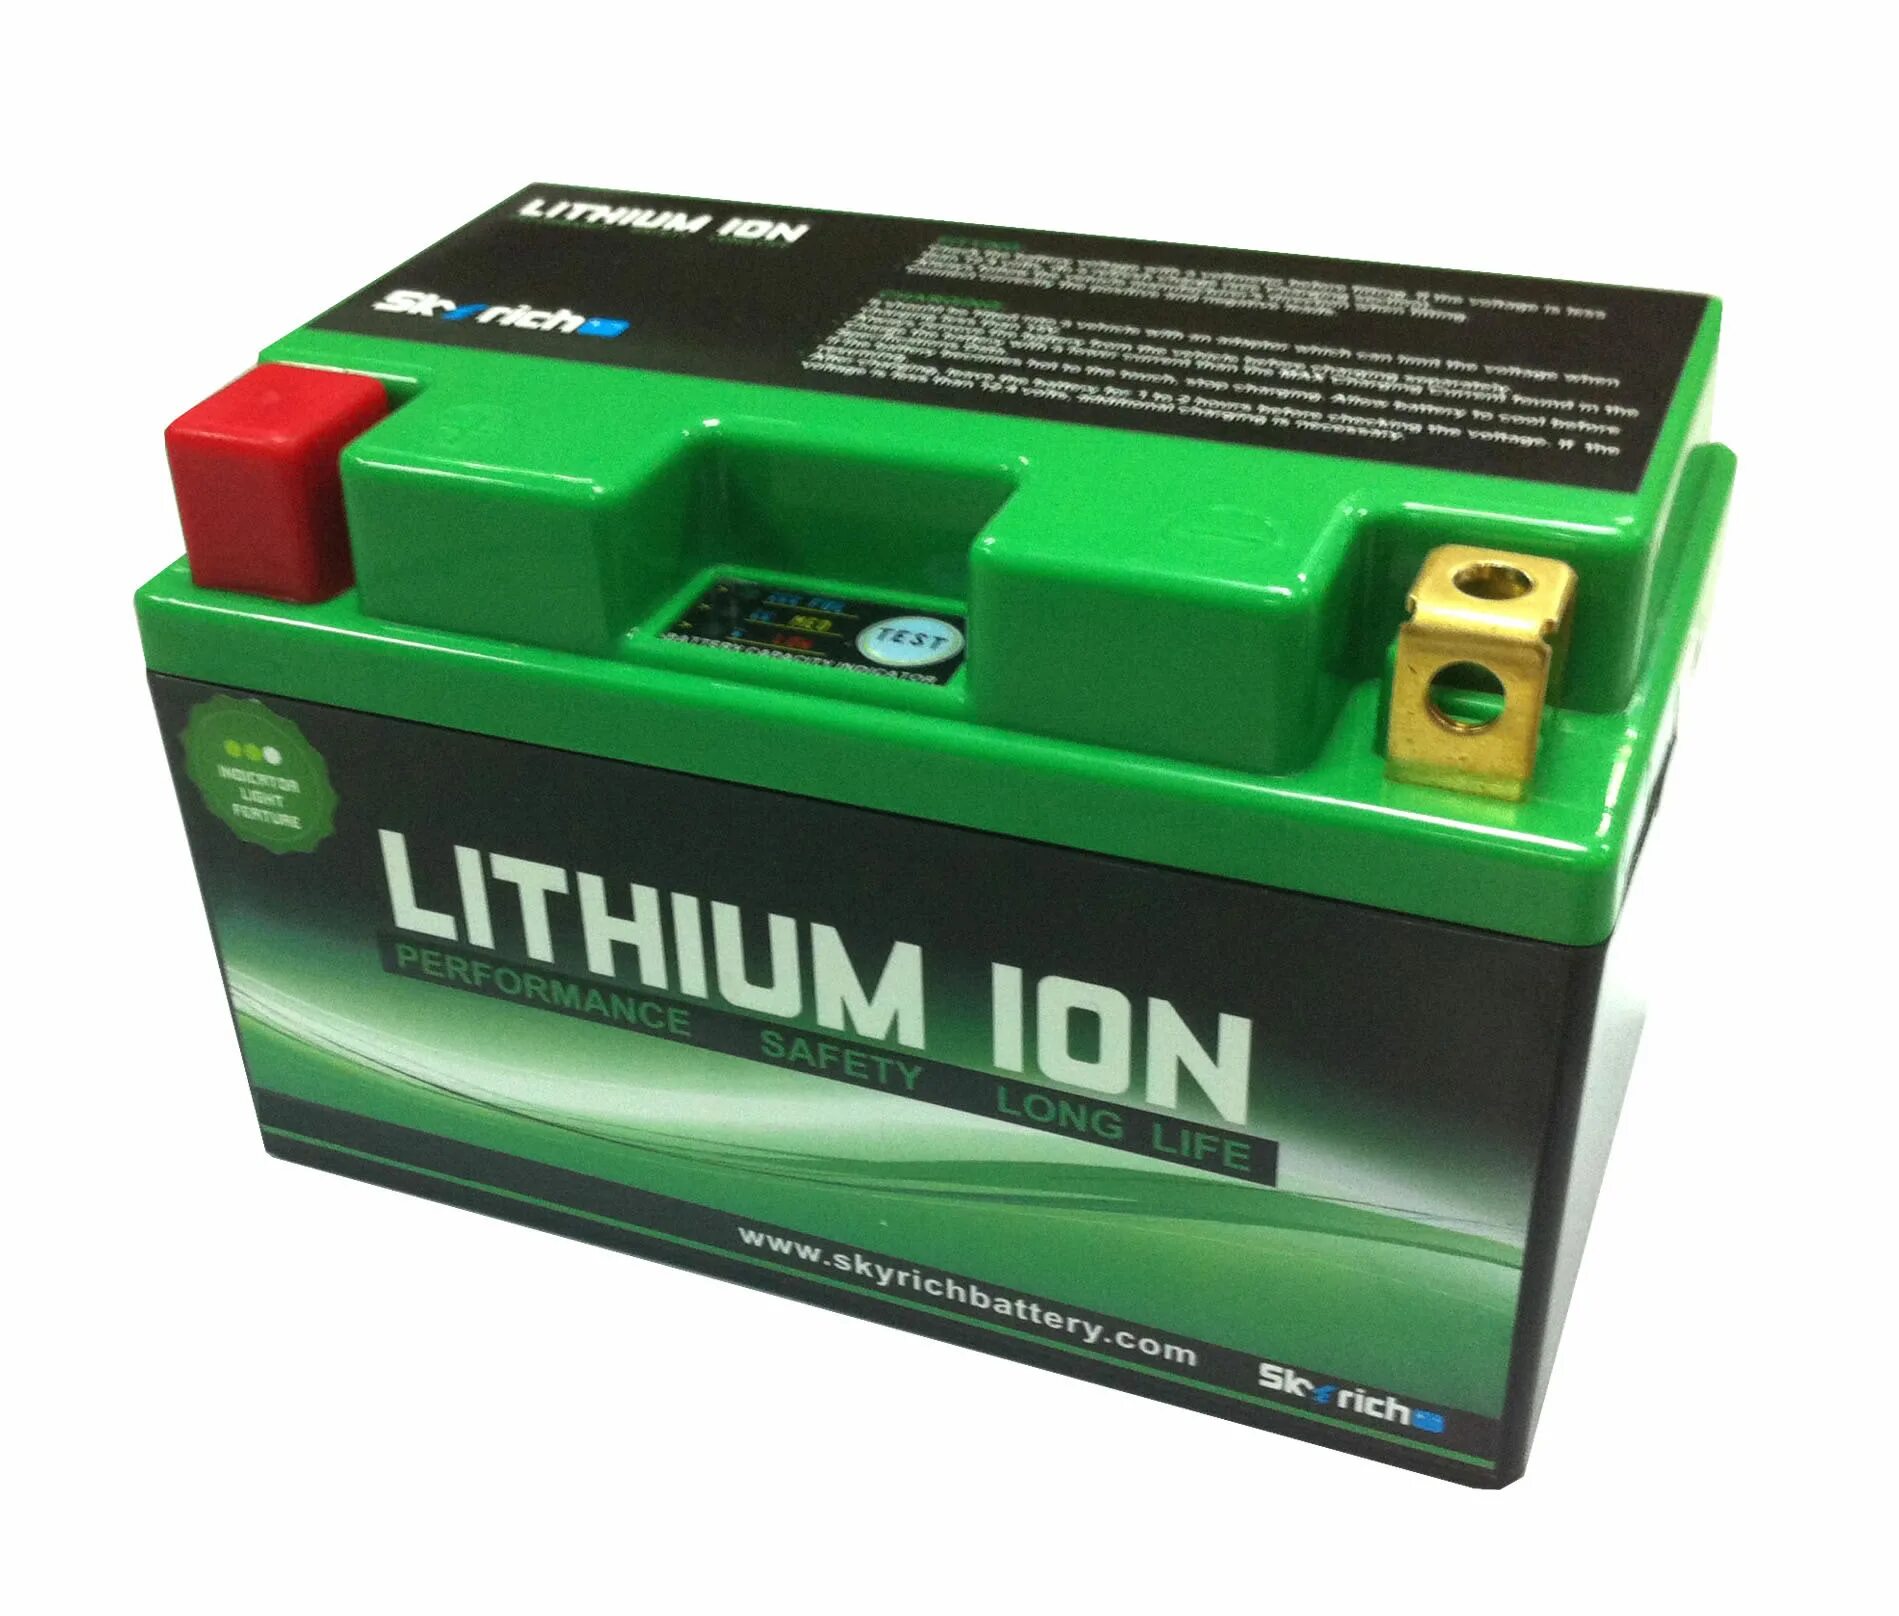 Ion batteries. Аккумулятор 12в литий ионный. Литиум аккумулятор 2 в 1. Литий-ионный аккумулятор 42120. Литиево ионные аккумуляторы.